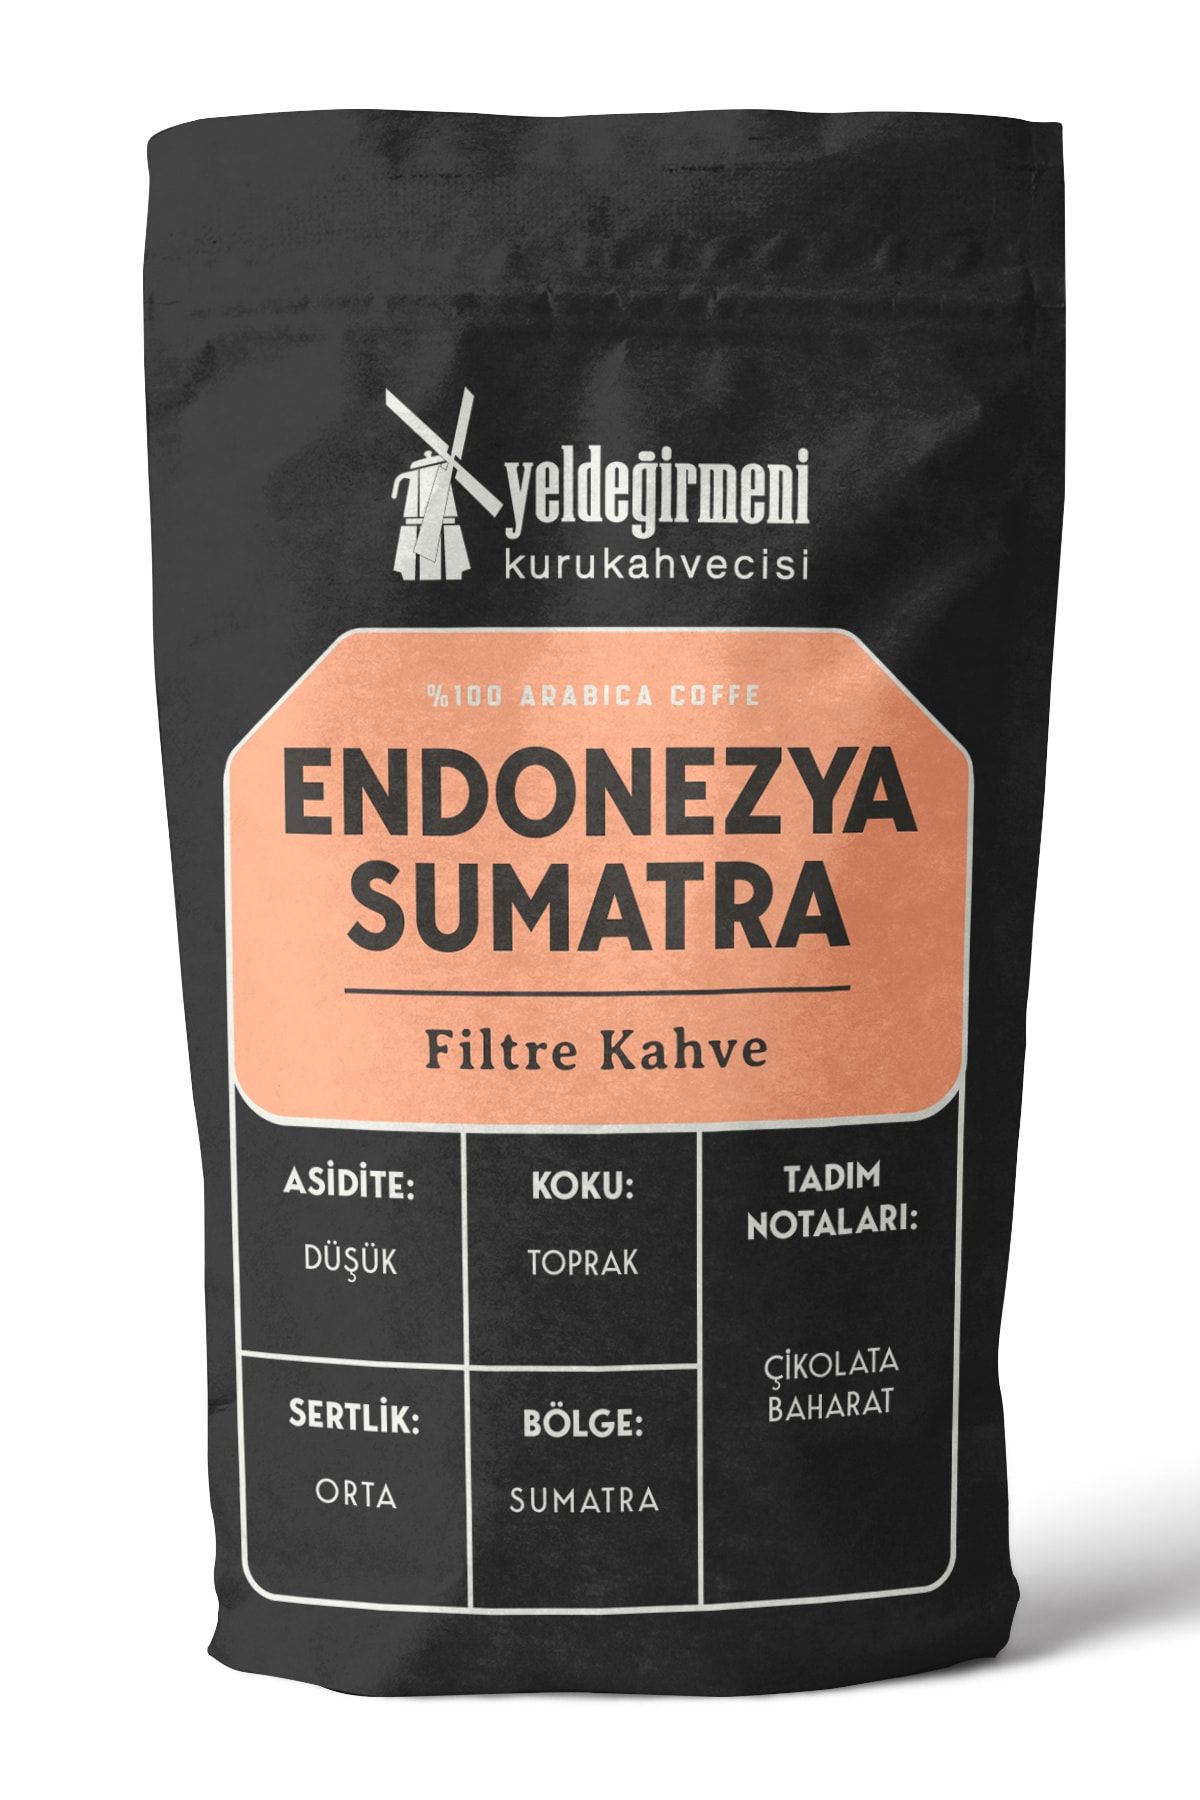 Yeldeğirmeni Kurukahvecisi Endonezya Sumatra Filtre Kahve 500 gr